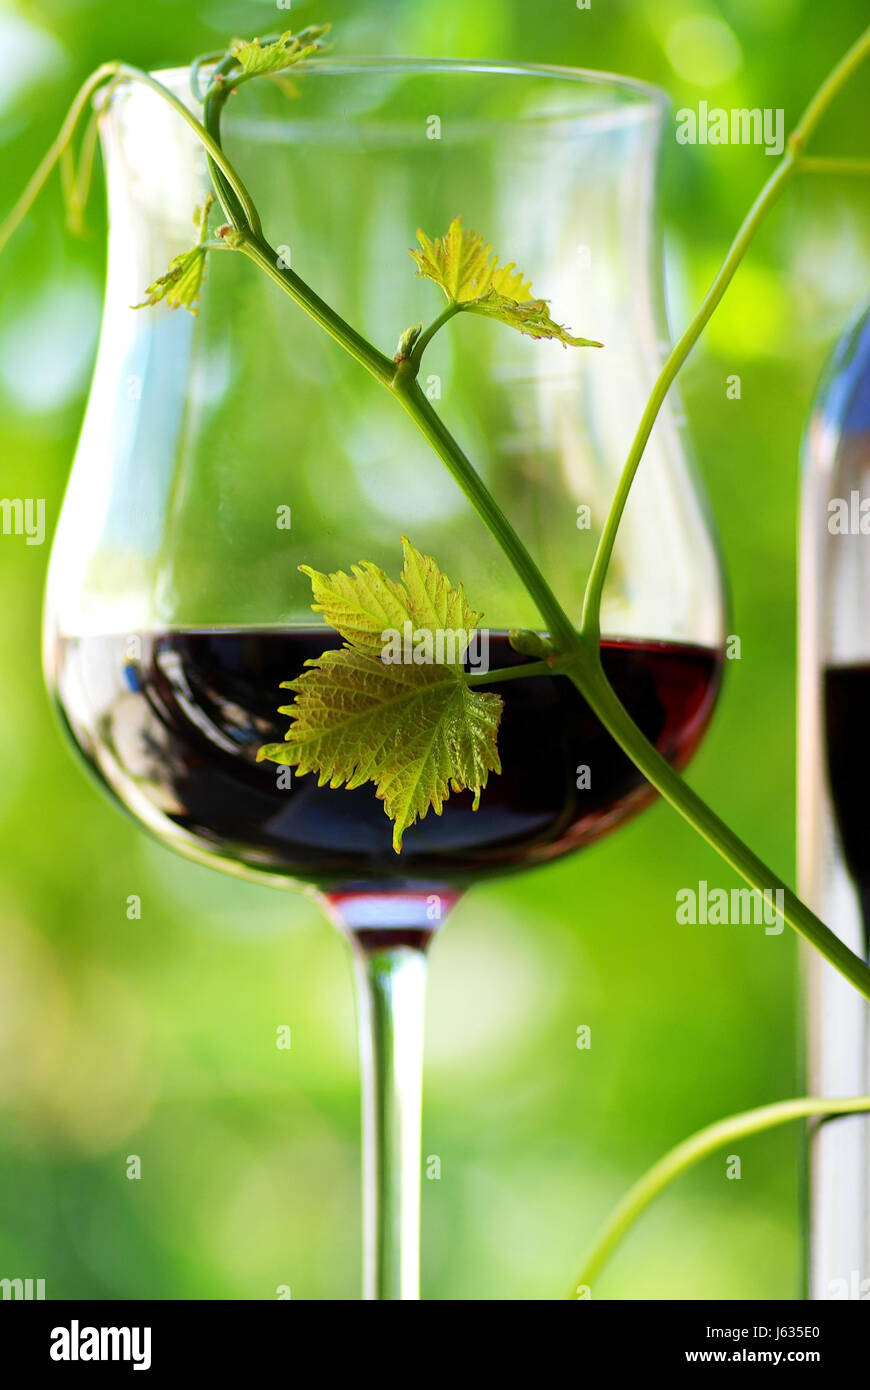 https://c8.alamy.com/comp/J635E0/glass-chalice-tumbler-leaf-wine-alcohol-beverage-winery-cafe-cup-glass-J635E0.jpg